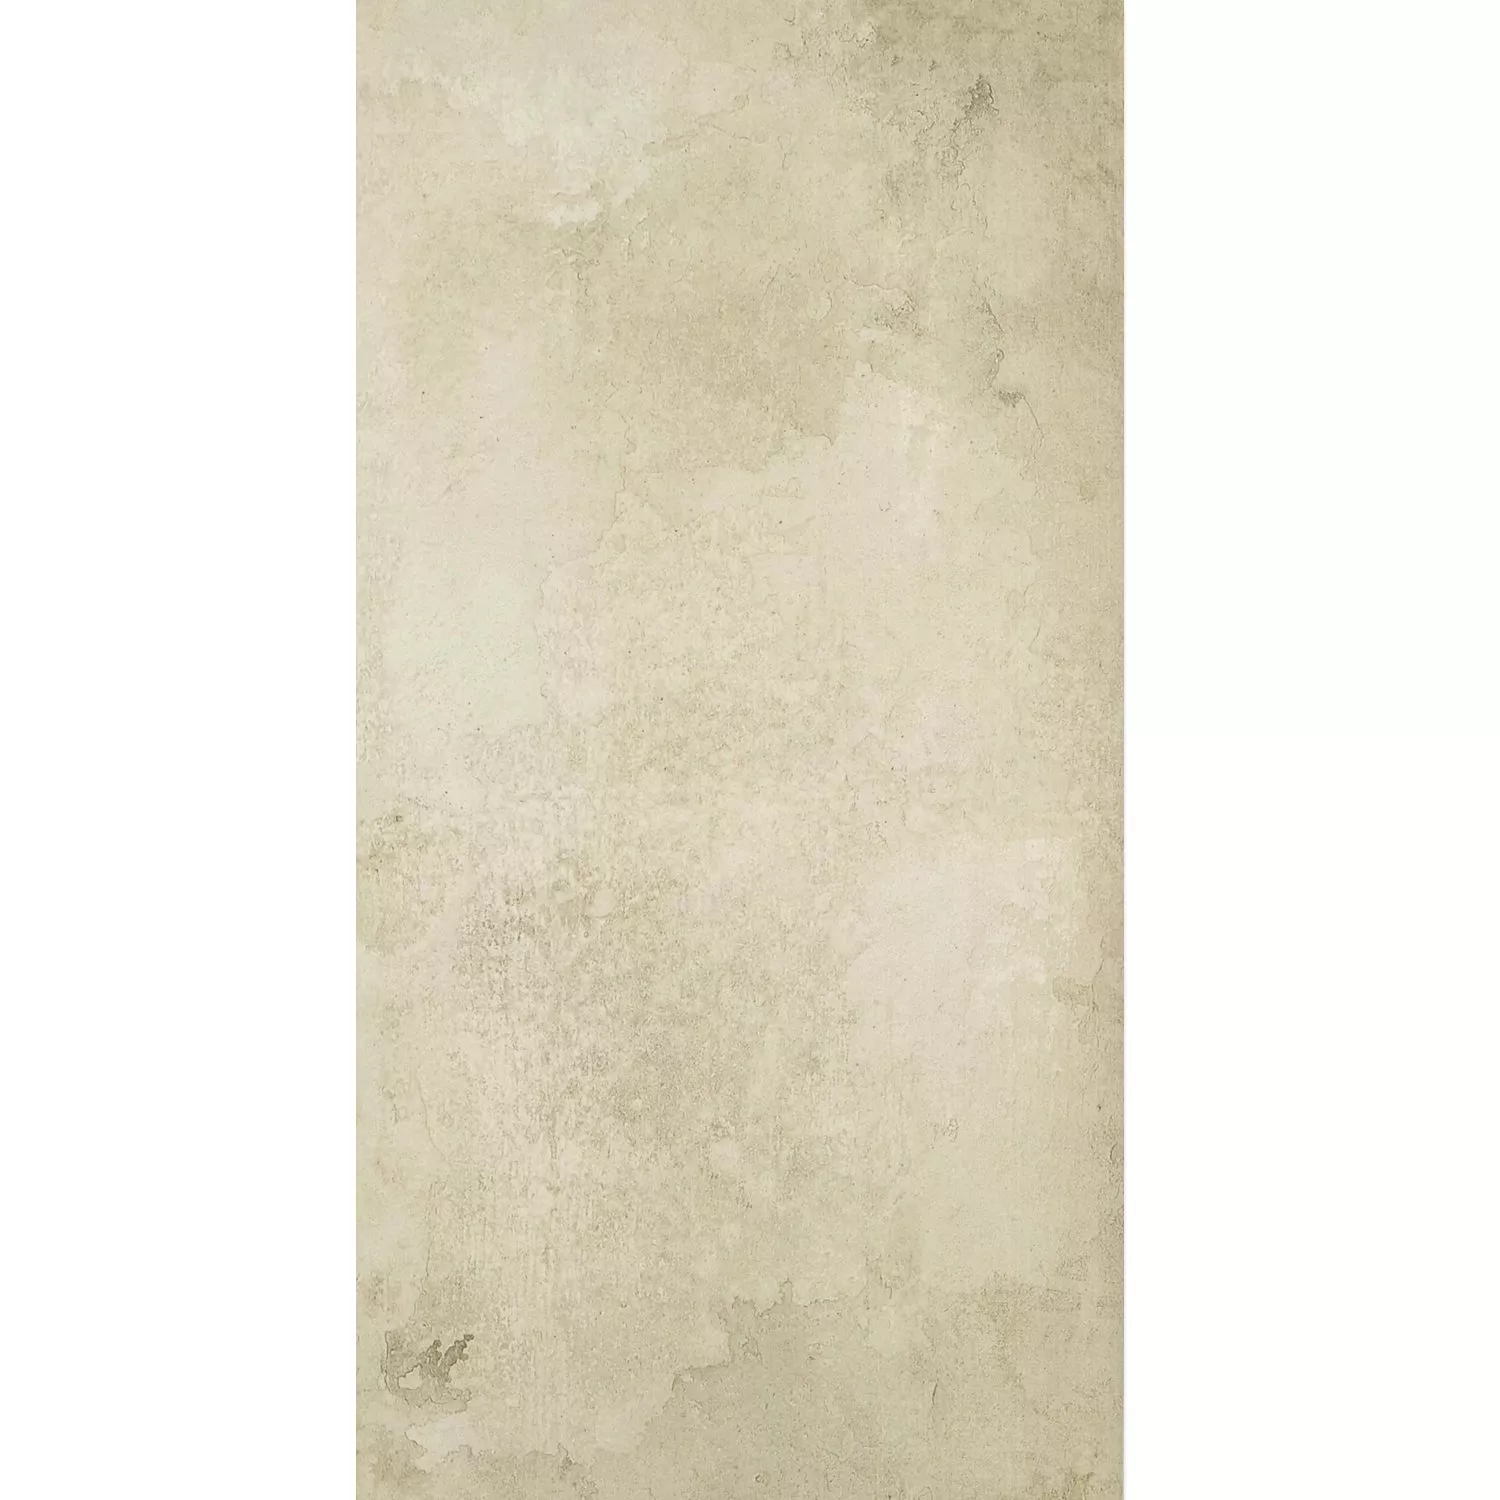 Vzorek Podlahové Dlaždice Haarlem Auster 45x90cm